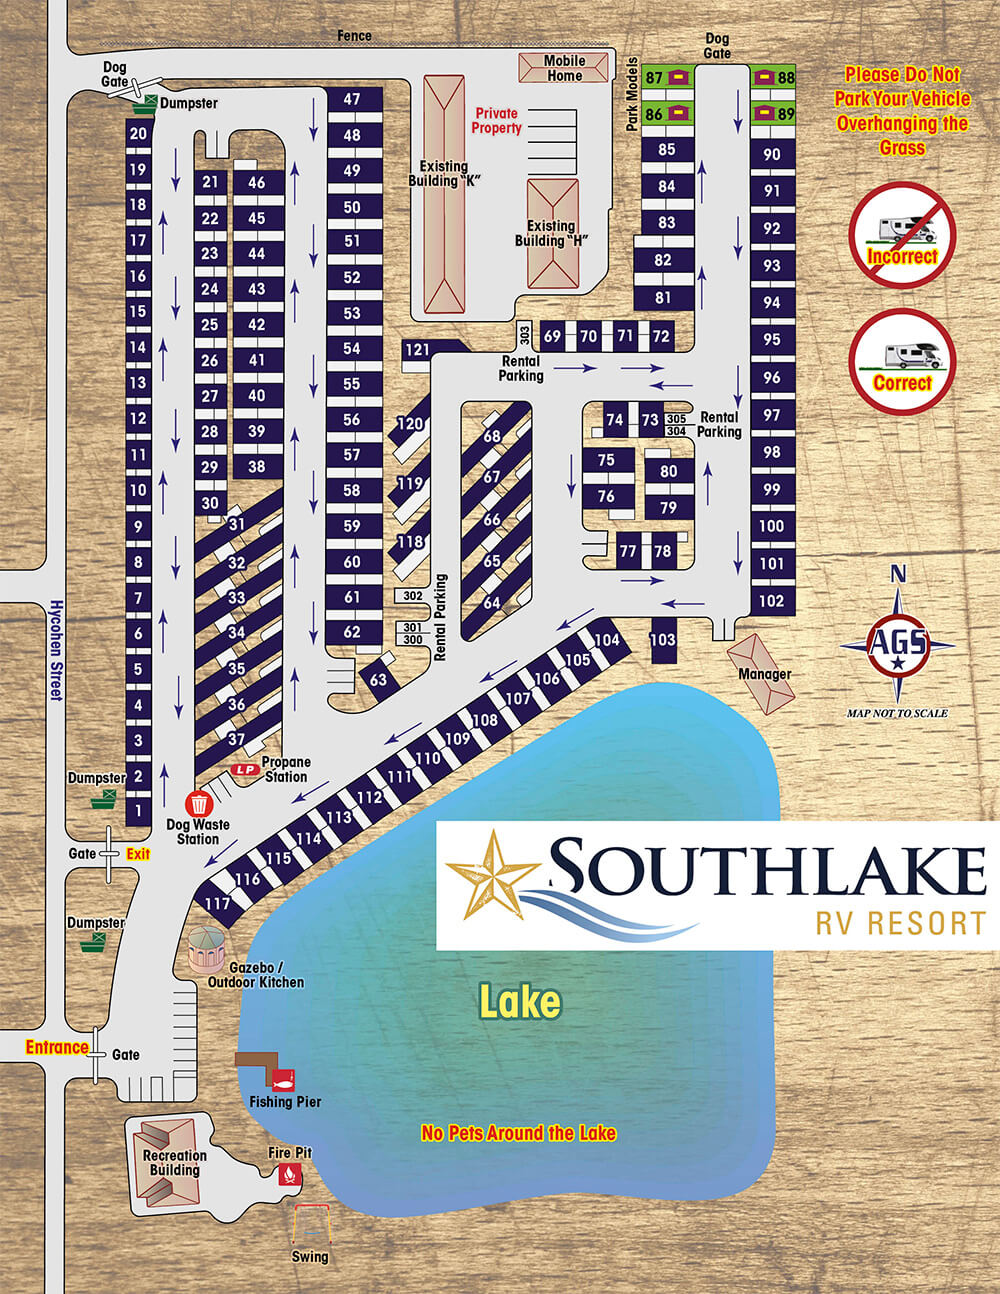 Southlake RV Resort Park Map